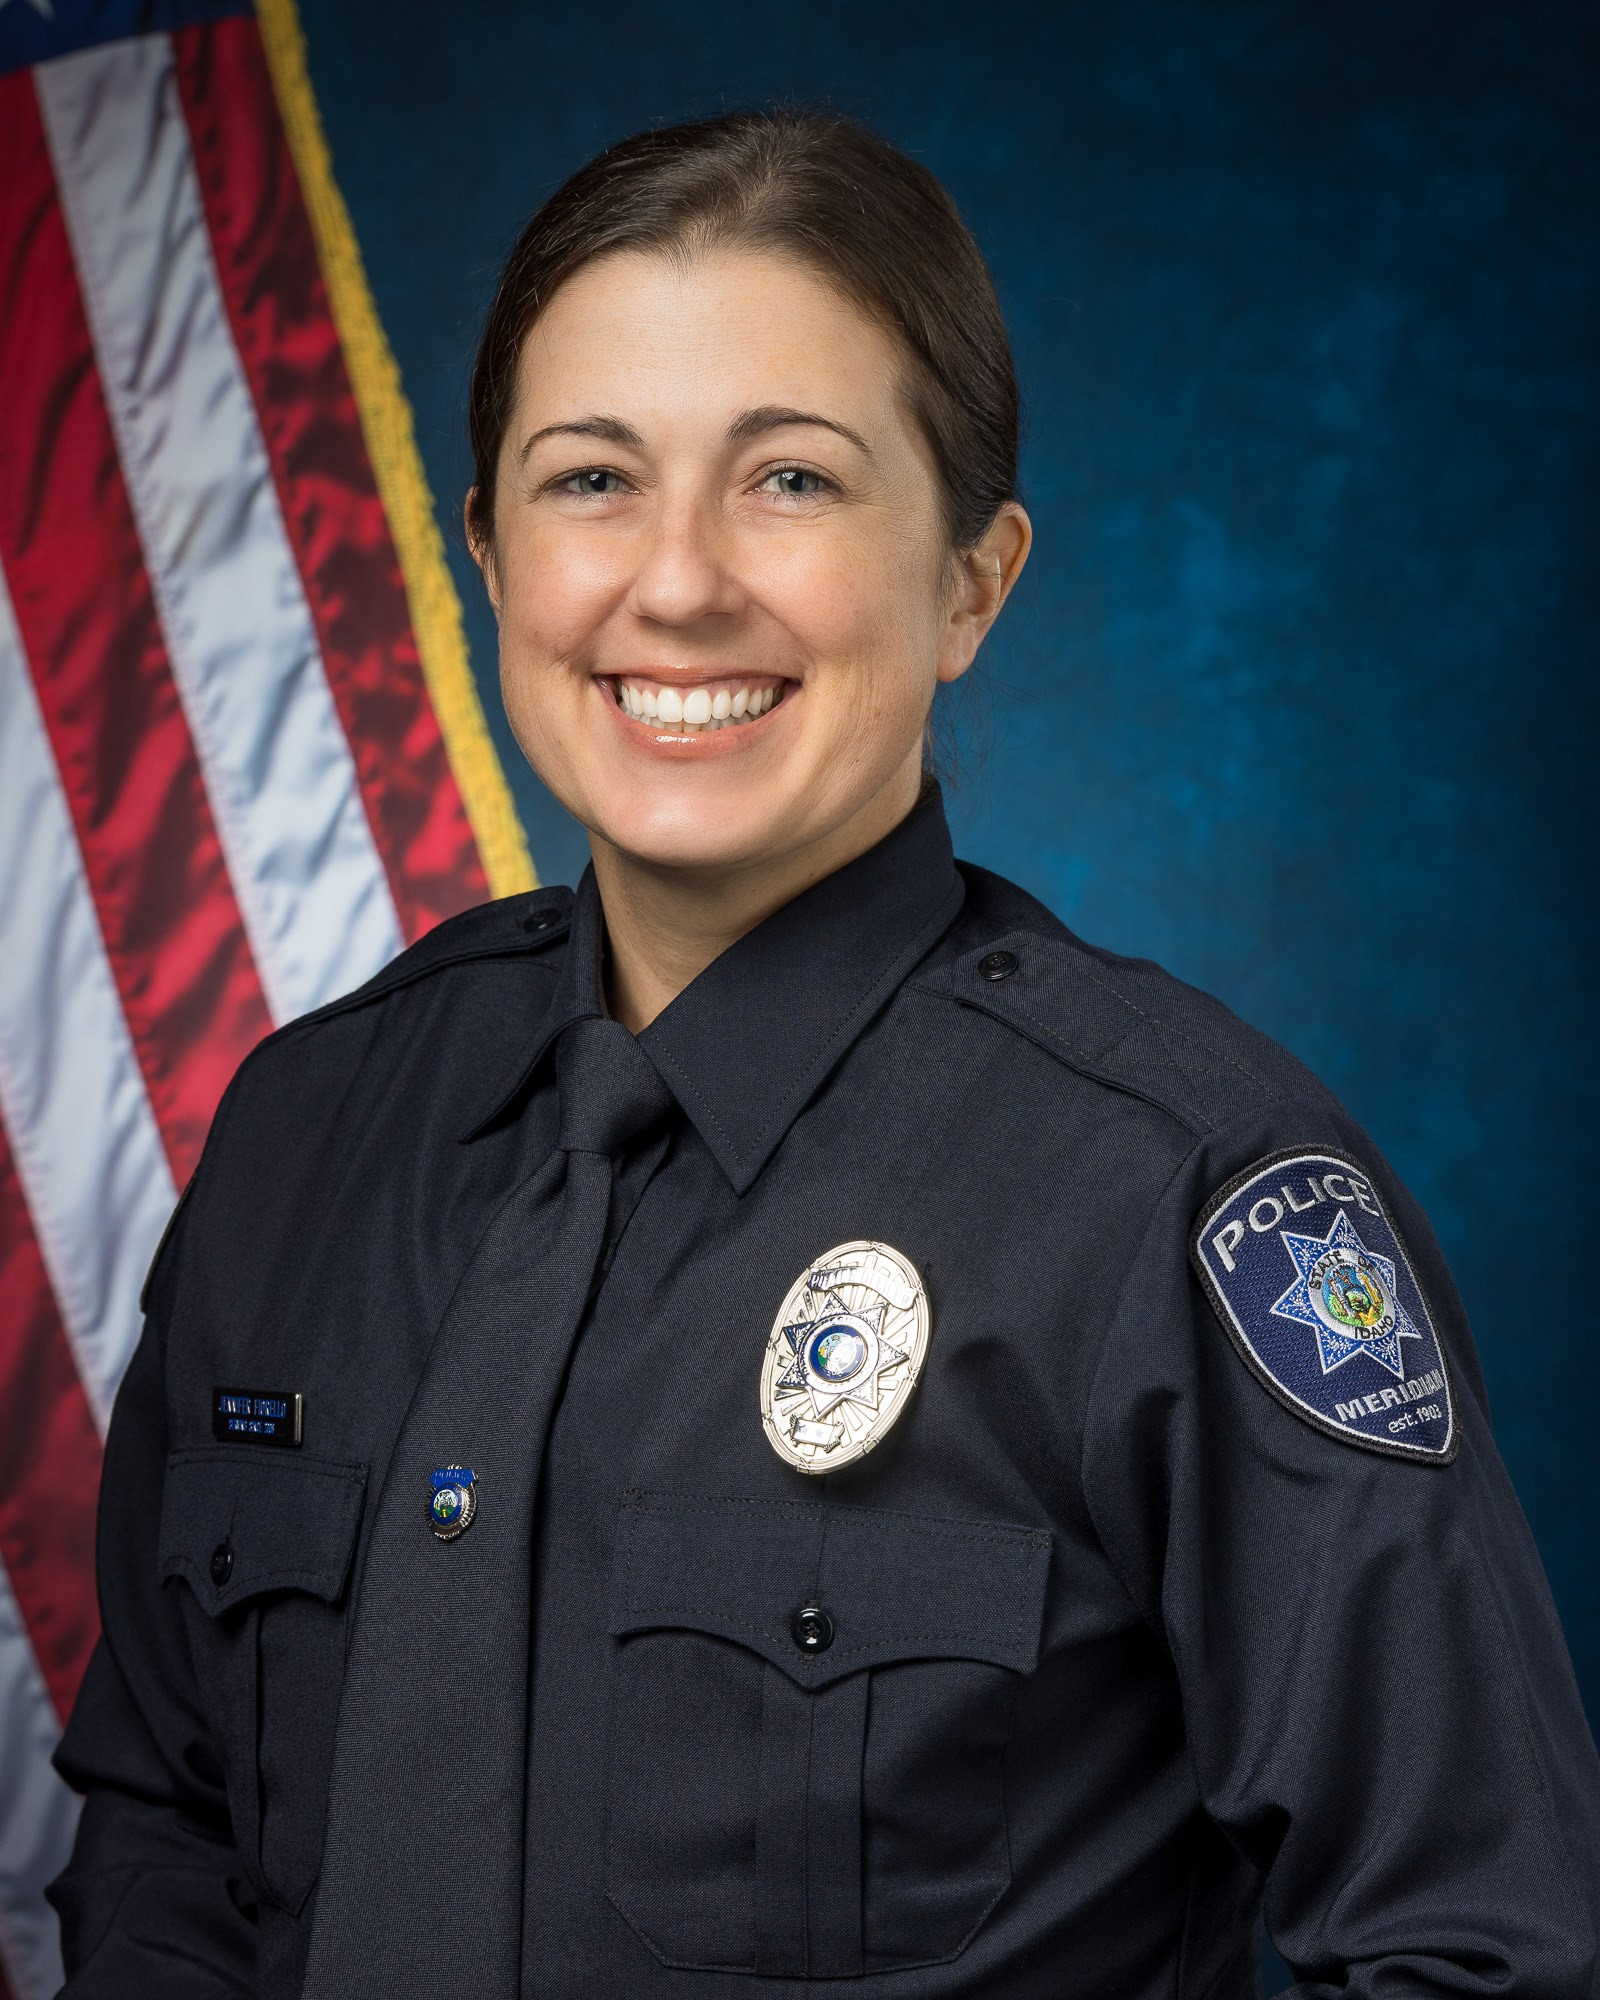 Officer Jennifer Fiorello